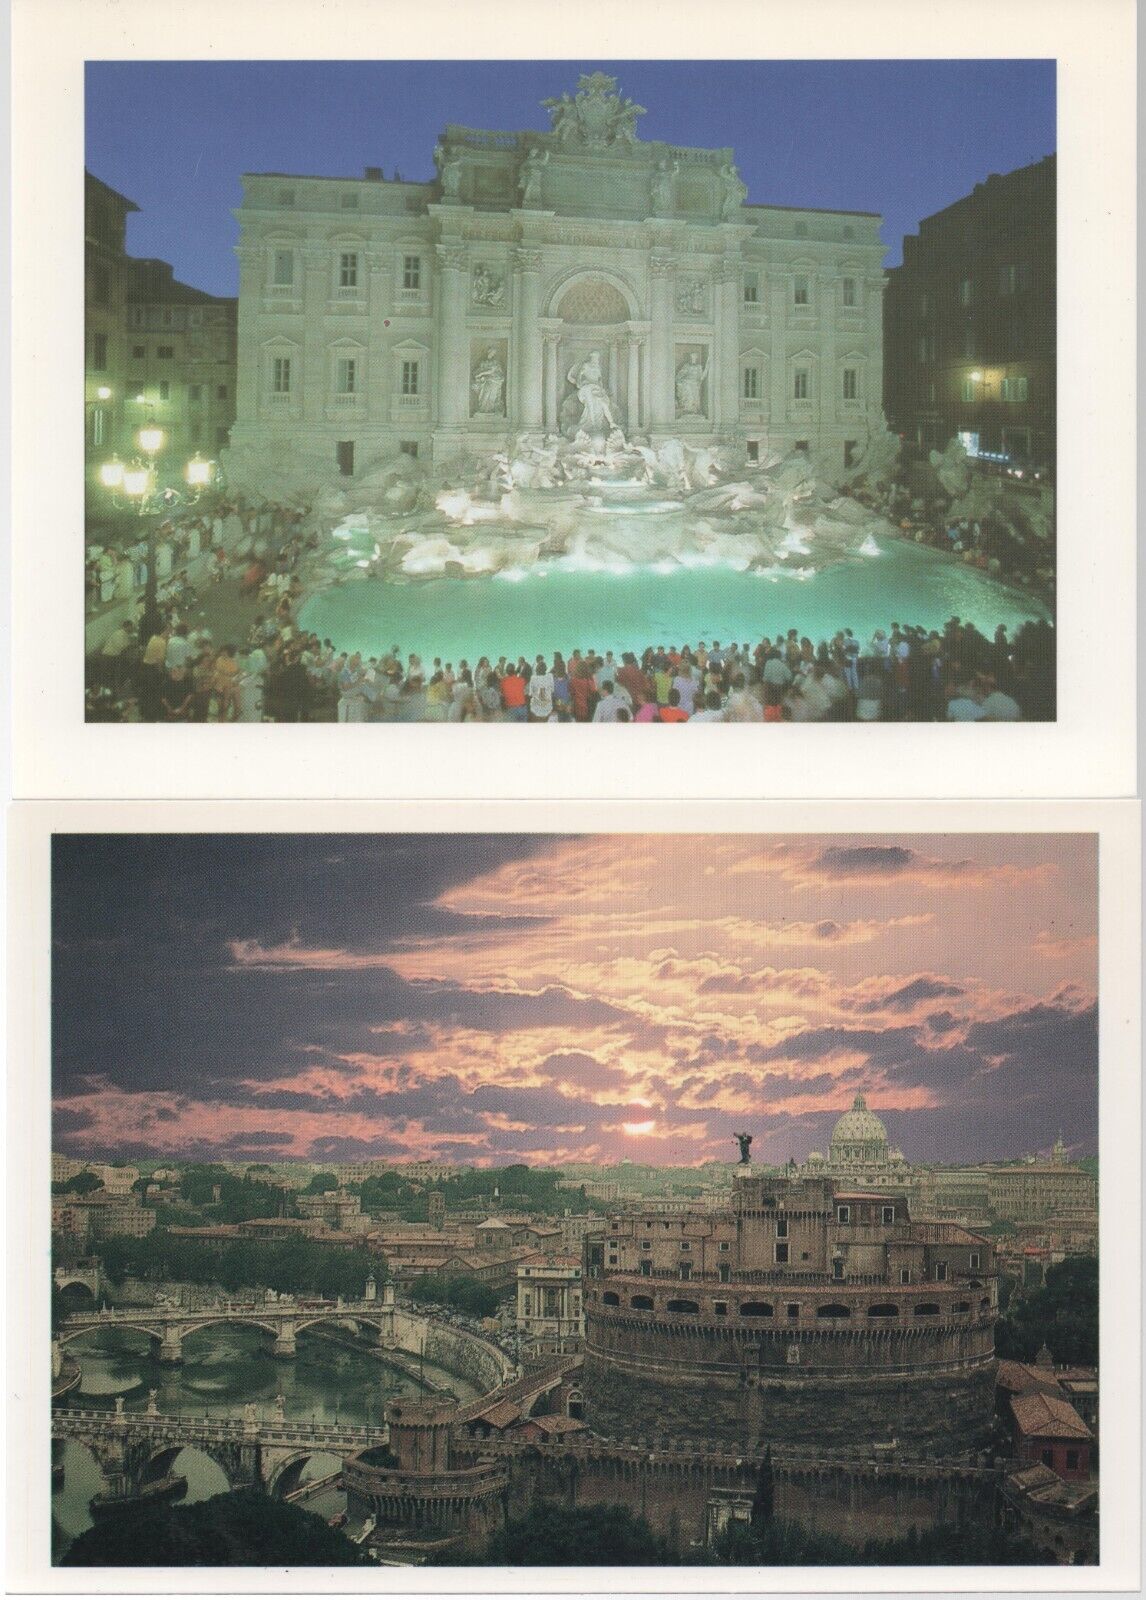 9 Postcards, Rome Italy, Art Excelsior Hotel, St Angelo's Bridge, Trevi Fountain